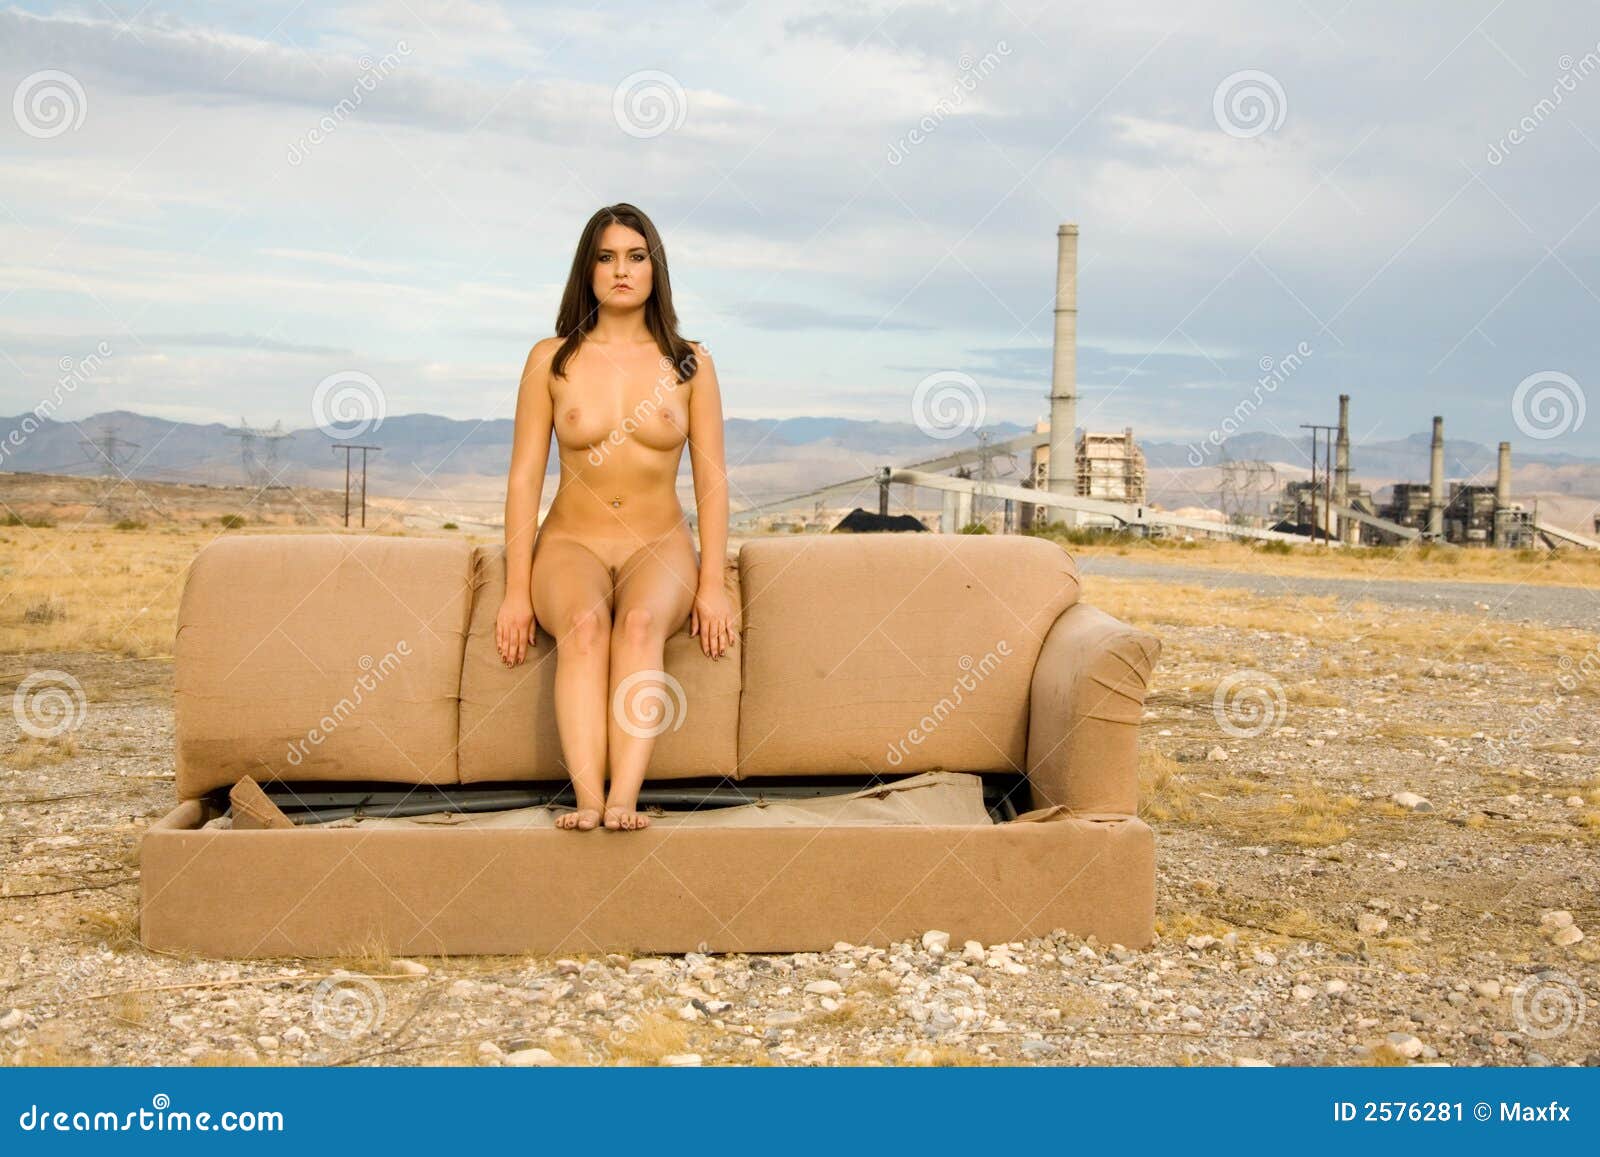 girl nude in the desert free hd photo